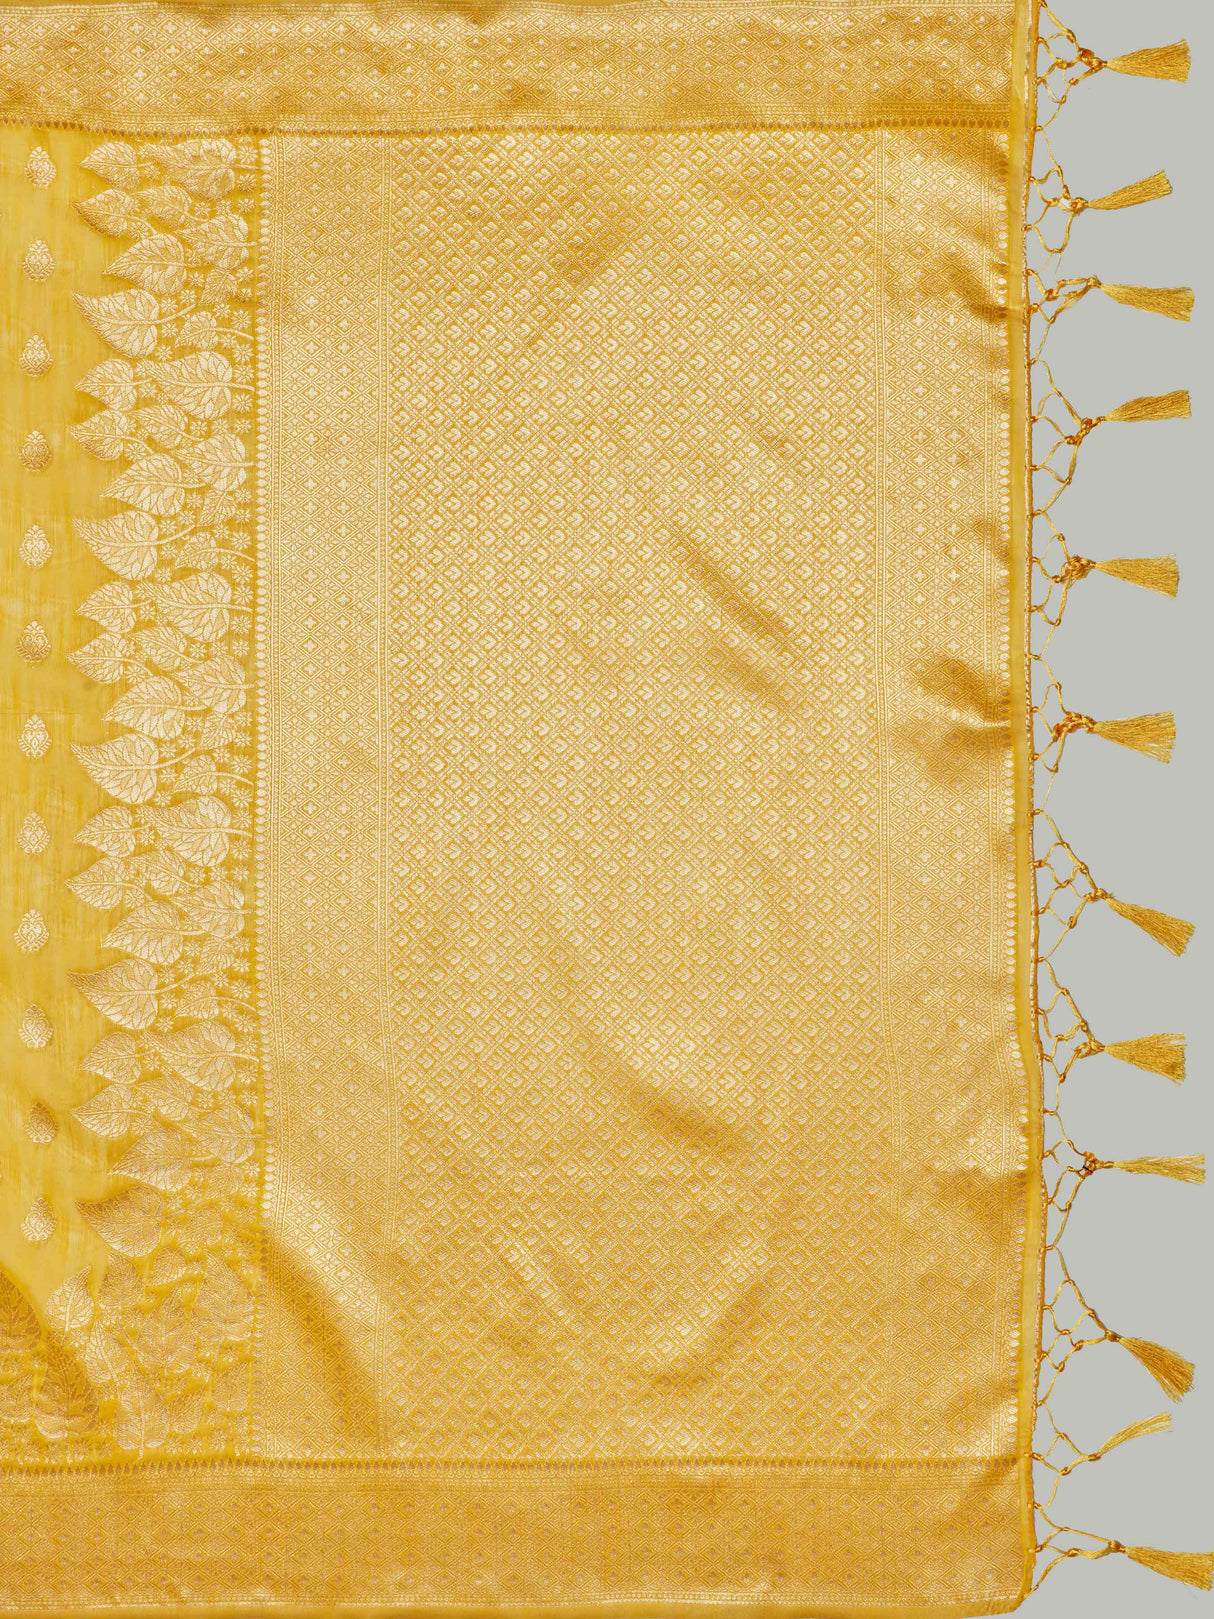 Mimosa Women's Woven Design Banarasi Poly Cotton Saree With Blouse Piece : SA00001061GD